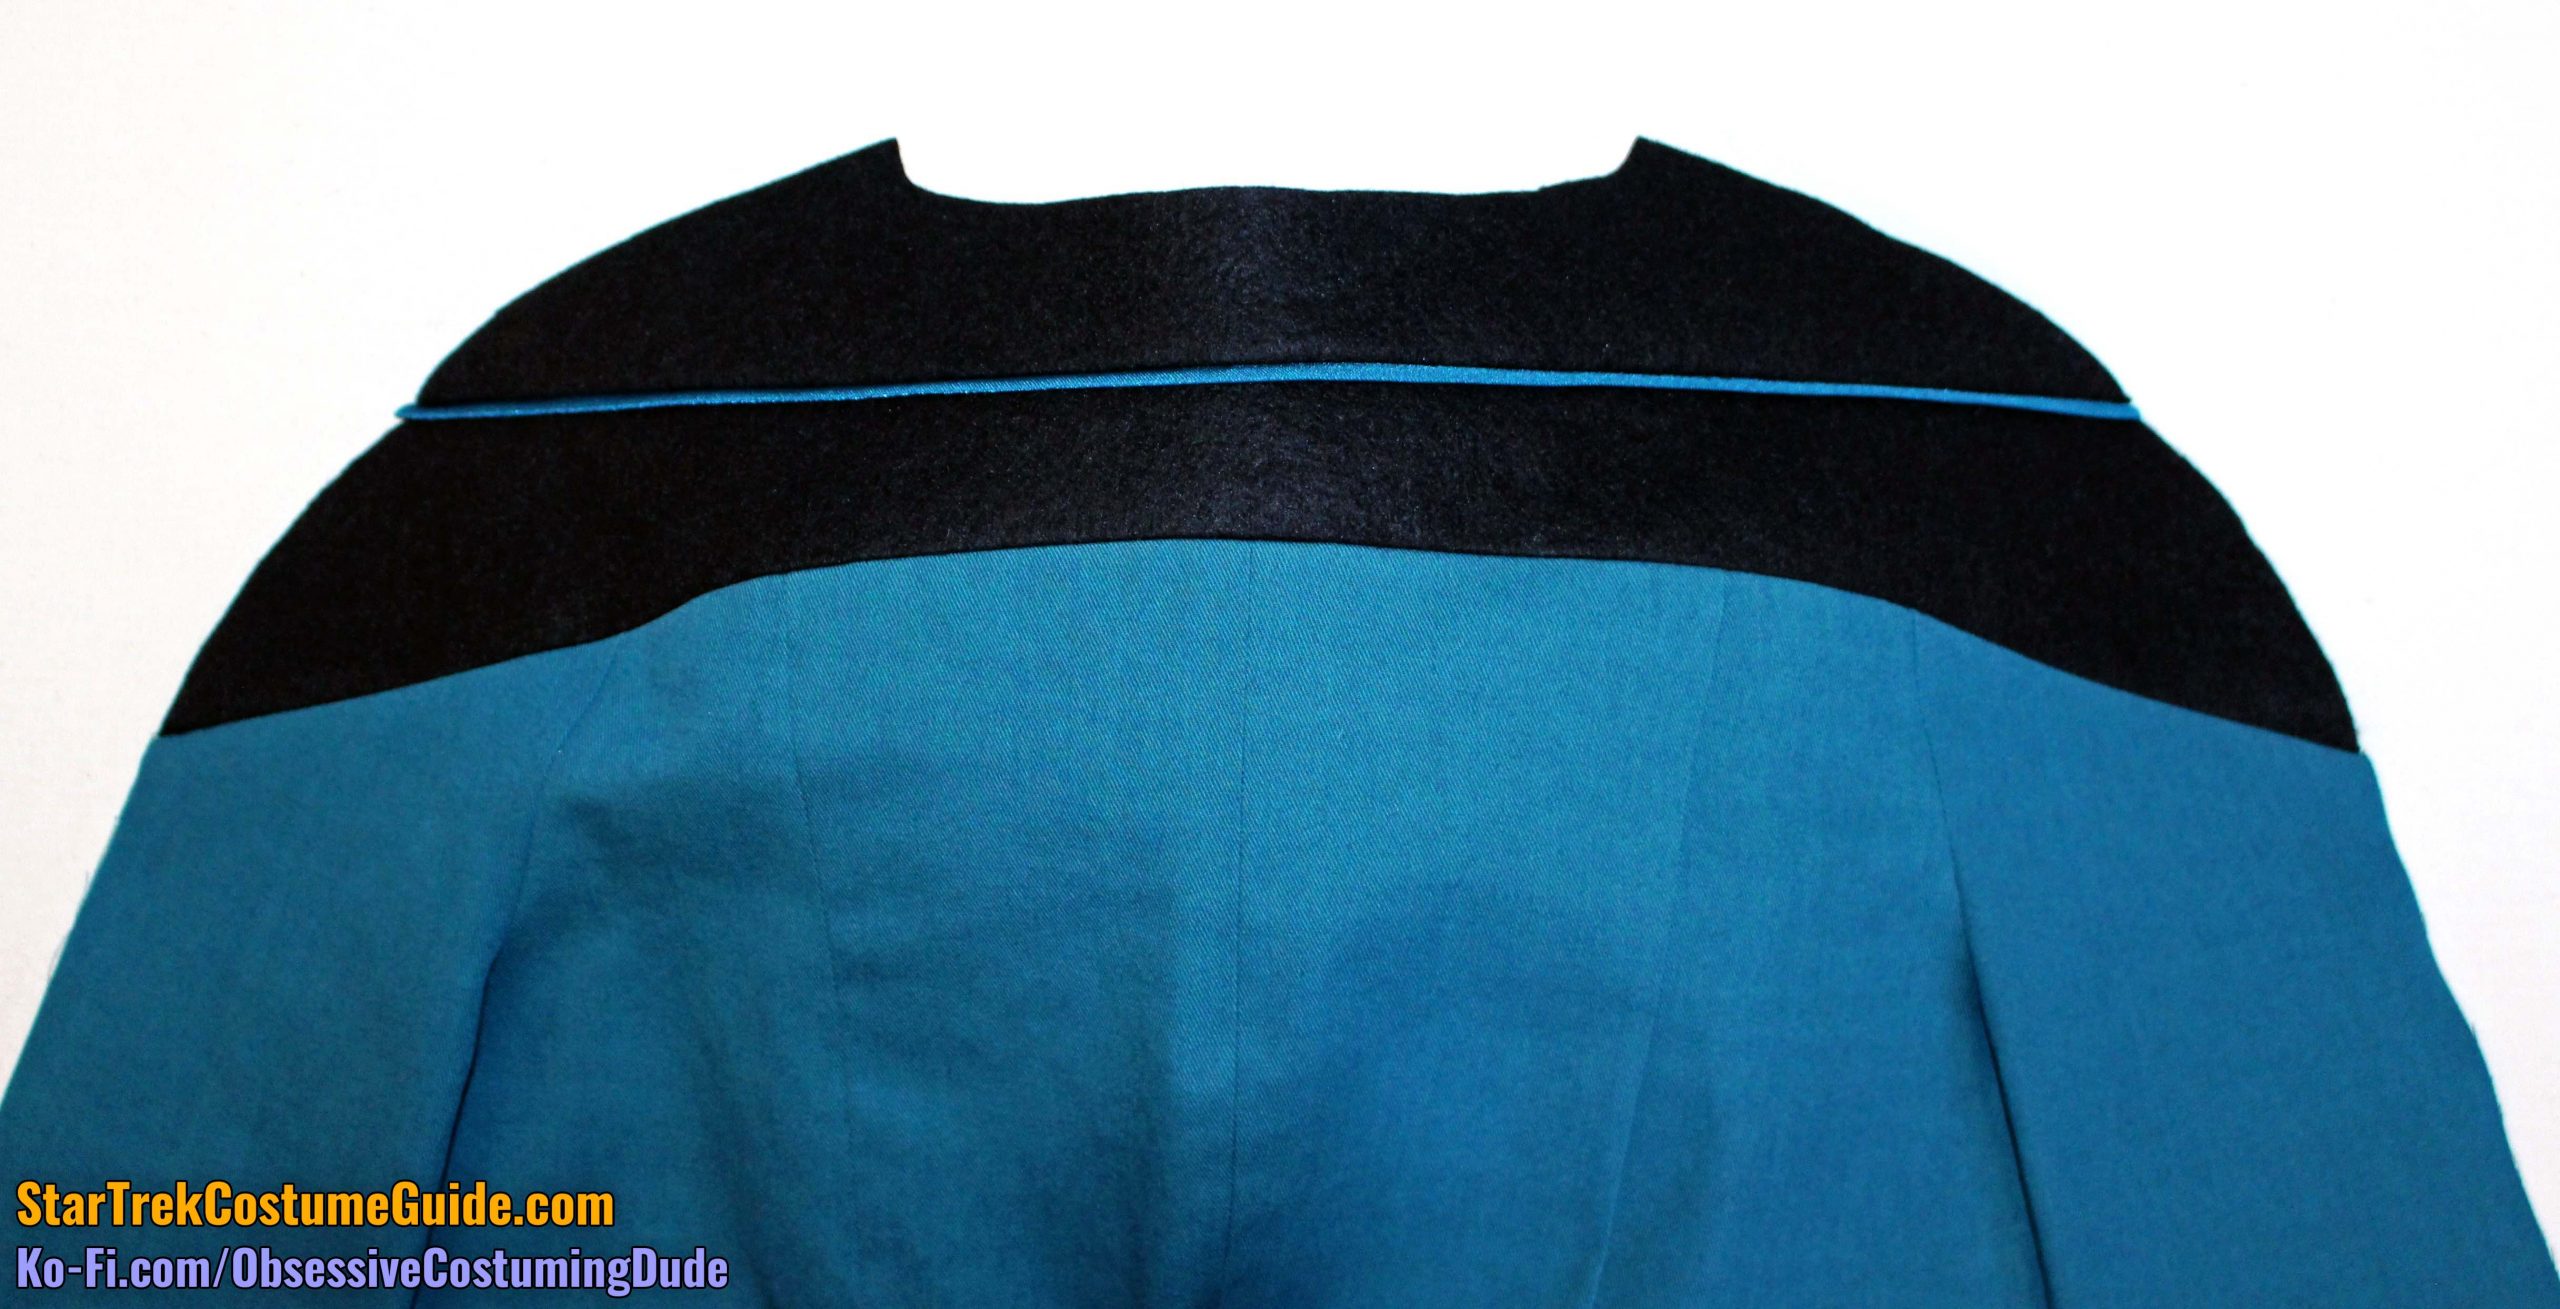 TNG medical smock sewing tutorial - Star Trek Costume Guide